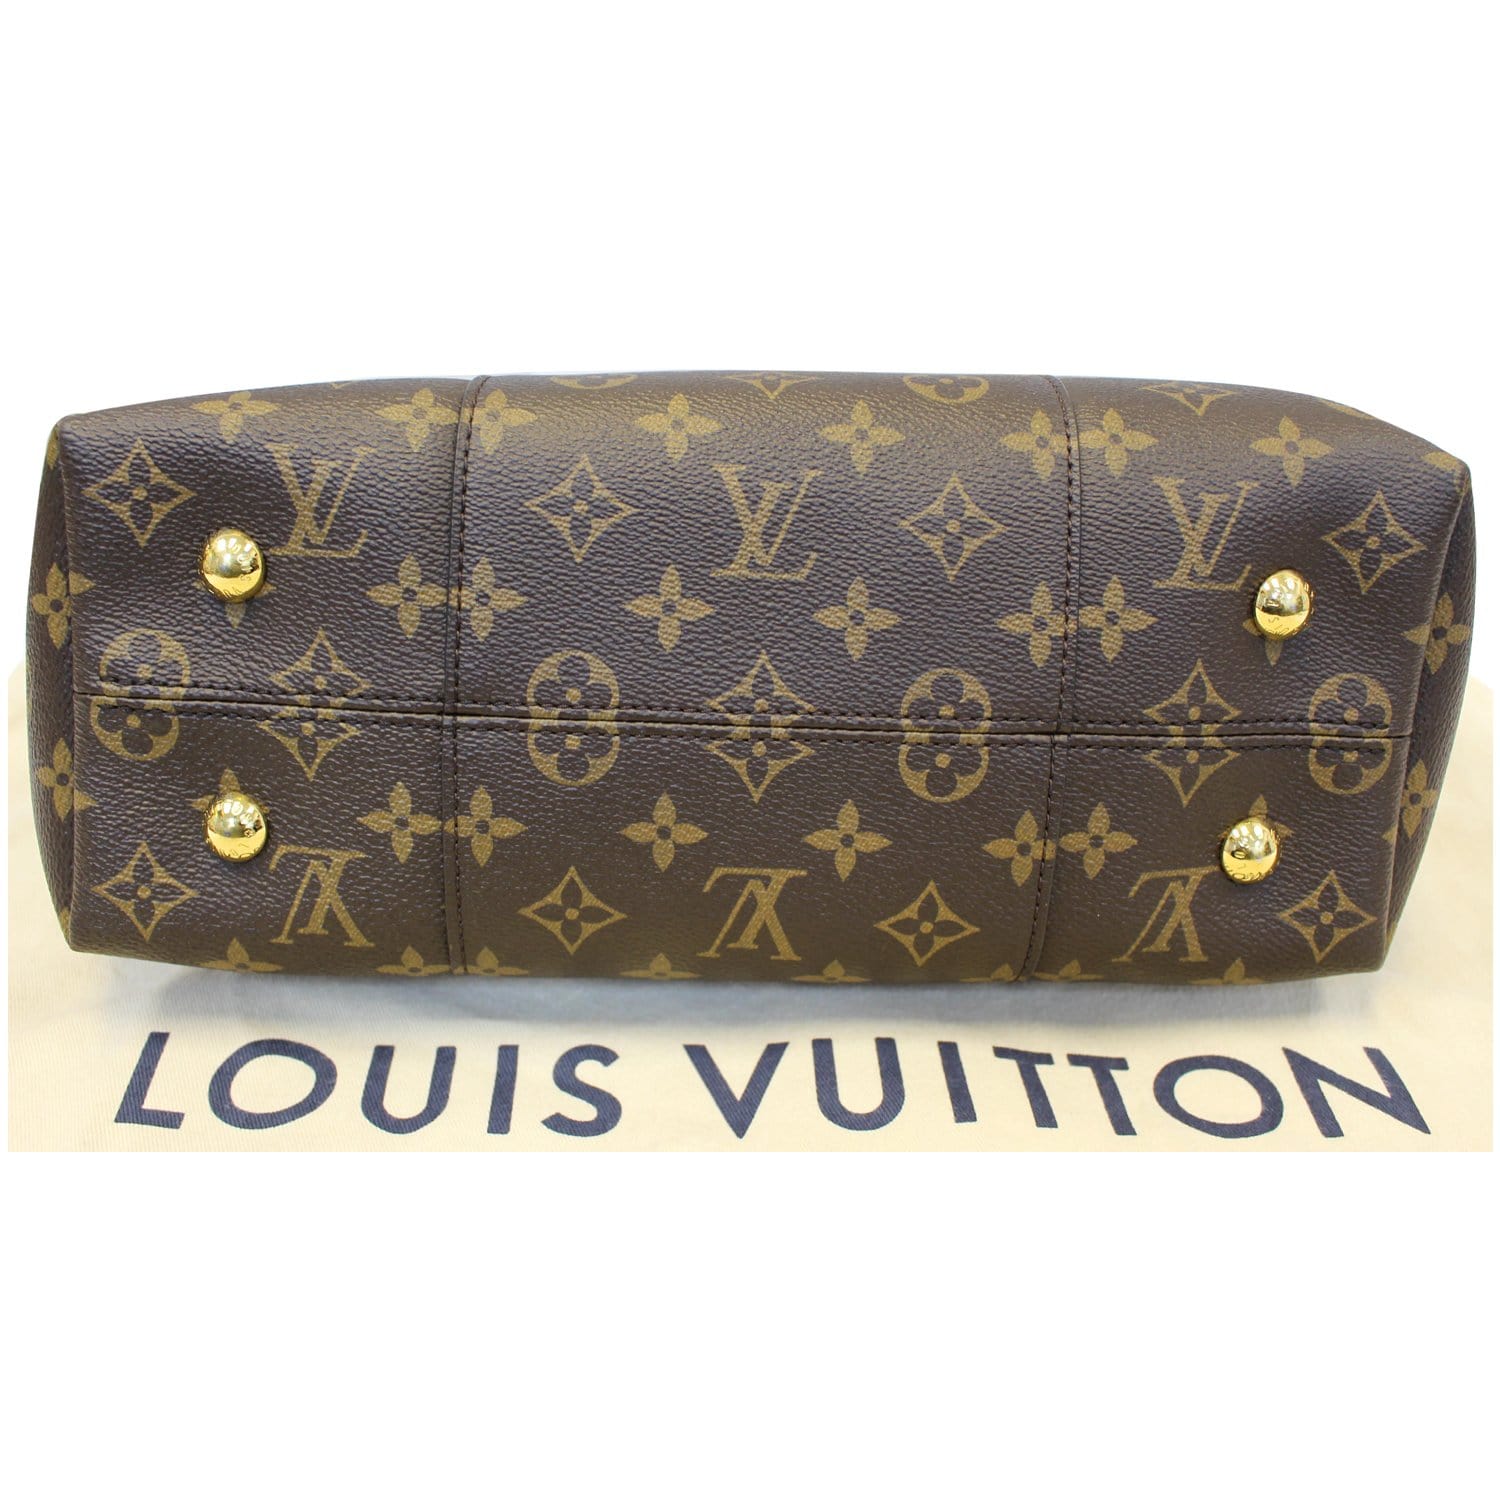 Louis Vuitton : Du miel de luxe